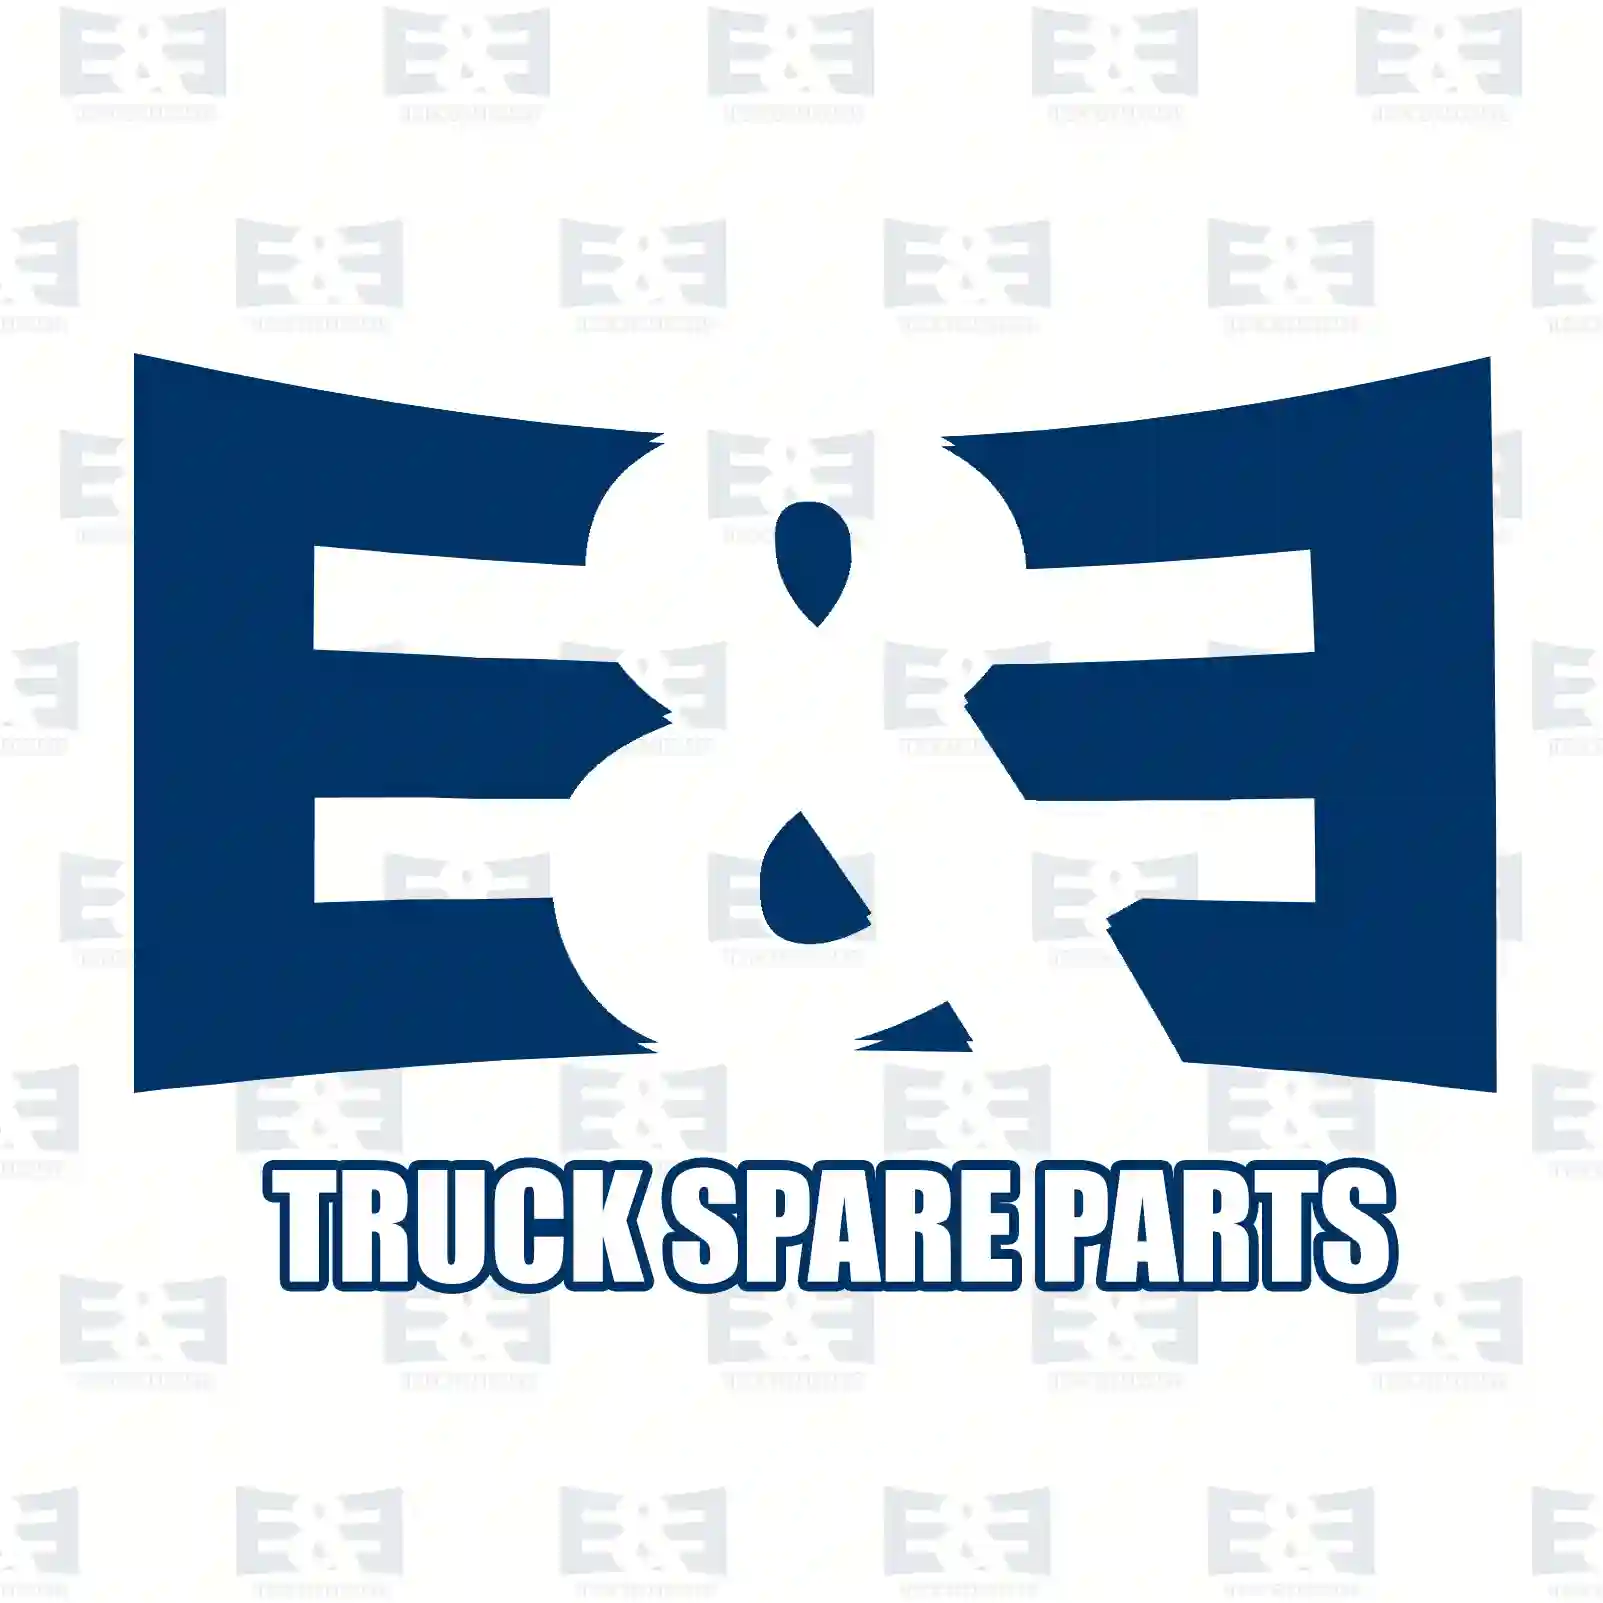 Spring bolt kit, 2E2270918, 2097425S2, 355148S2, ||  2E2270918 E&E Truck Spare Parts | Truck Spare Parts, Auotomotive Spare Parts Spring bolt kit, 2E2270918, 2097425S2, 355148S2, ||  2E2270918 E&E Truck Spare Parts | Truck Spare Parts, Auotomotive Spare Parts